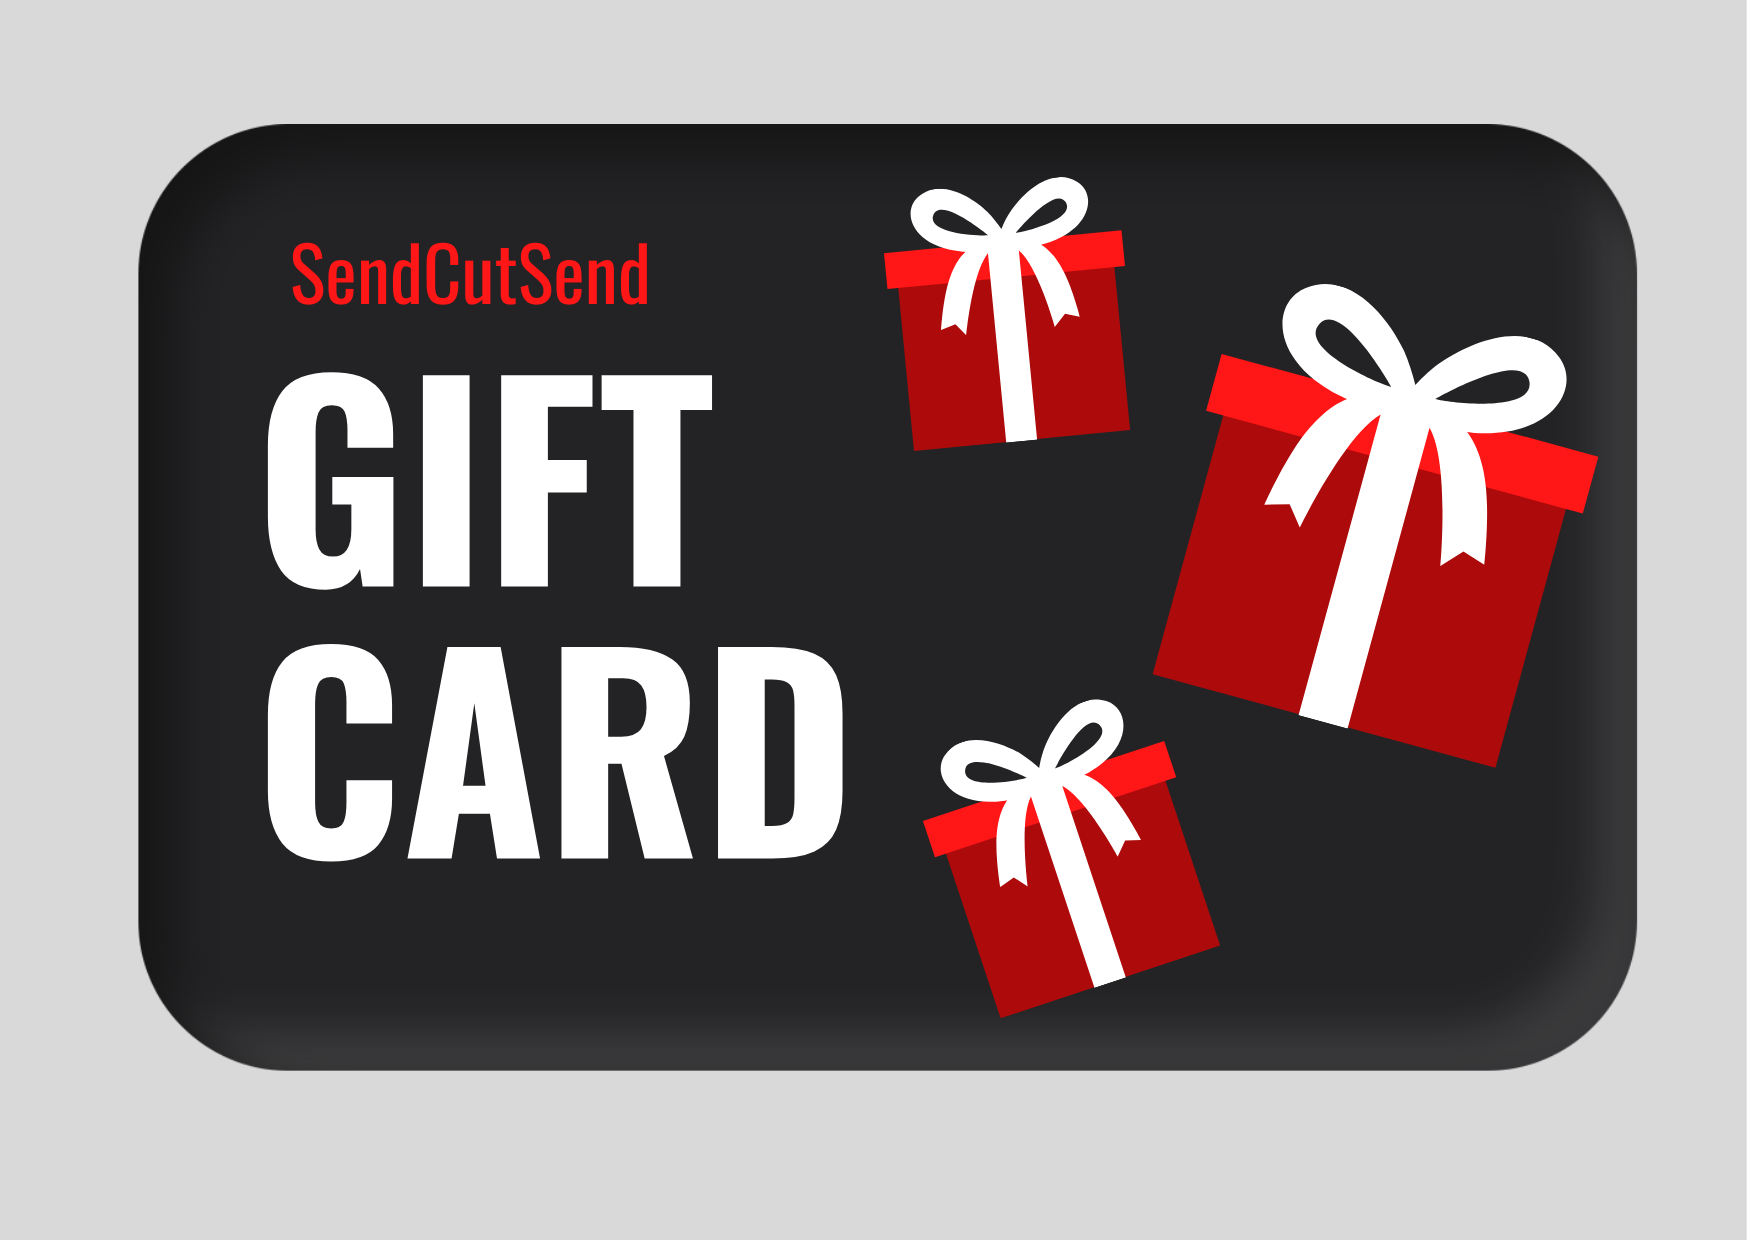 SendCutSend Gift Certificate